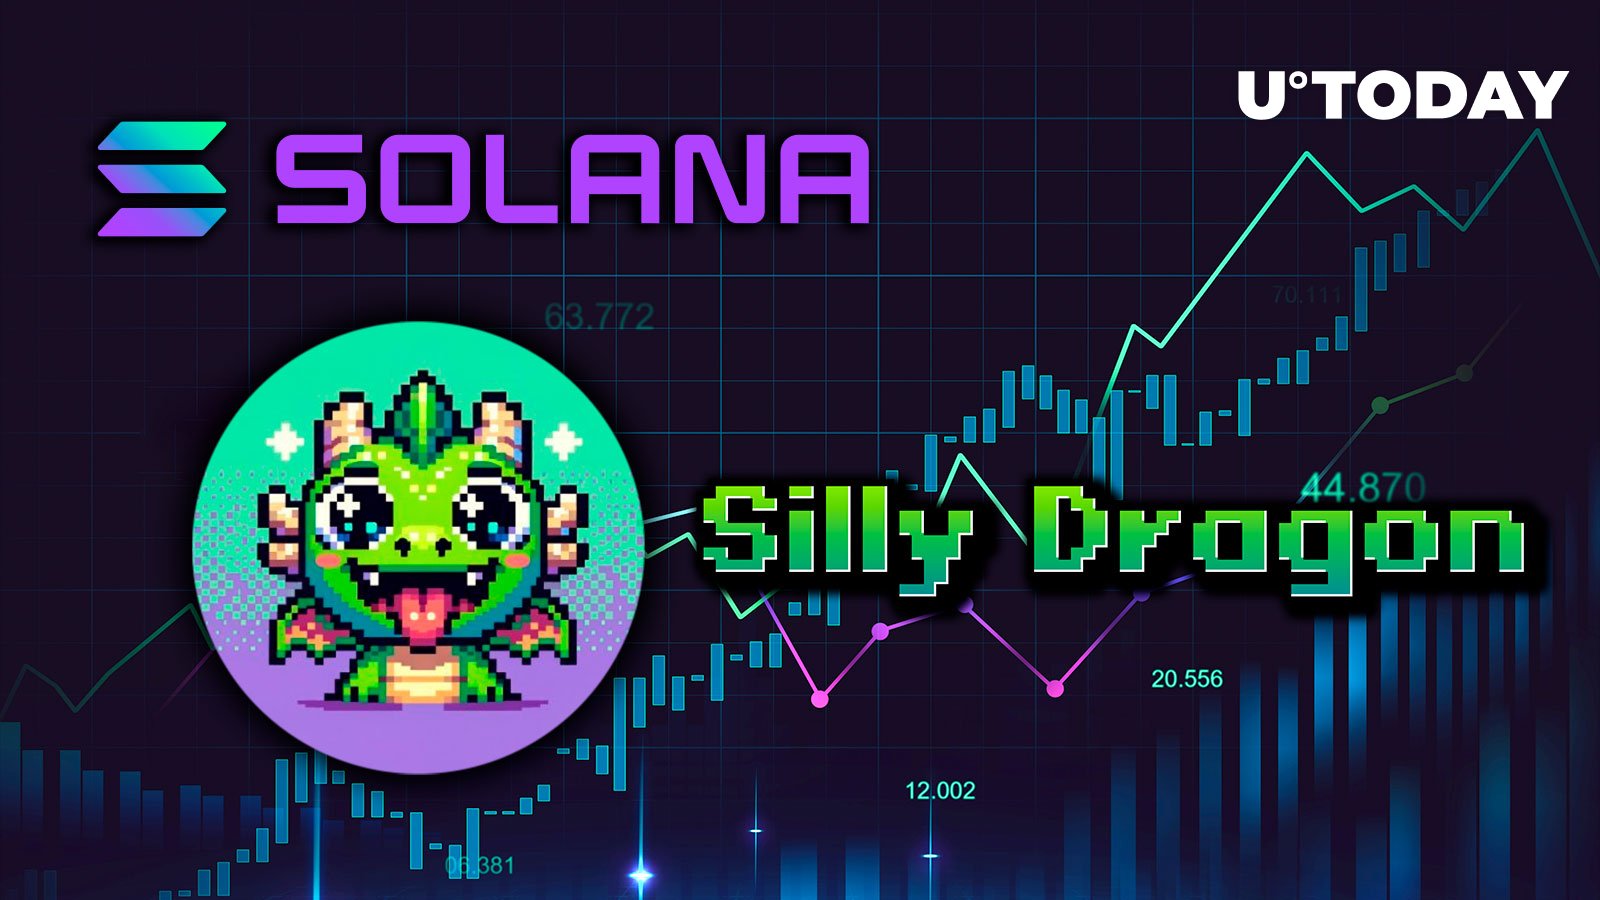 Solana-Based Meme Coin Soars Over 119%, Top 10 Addresses Gain 30x Profits